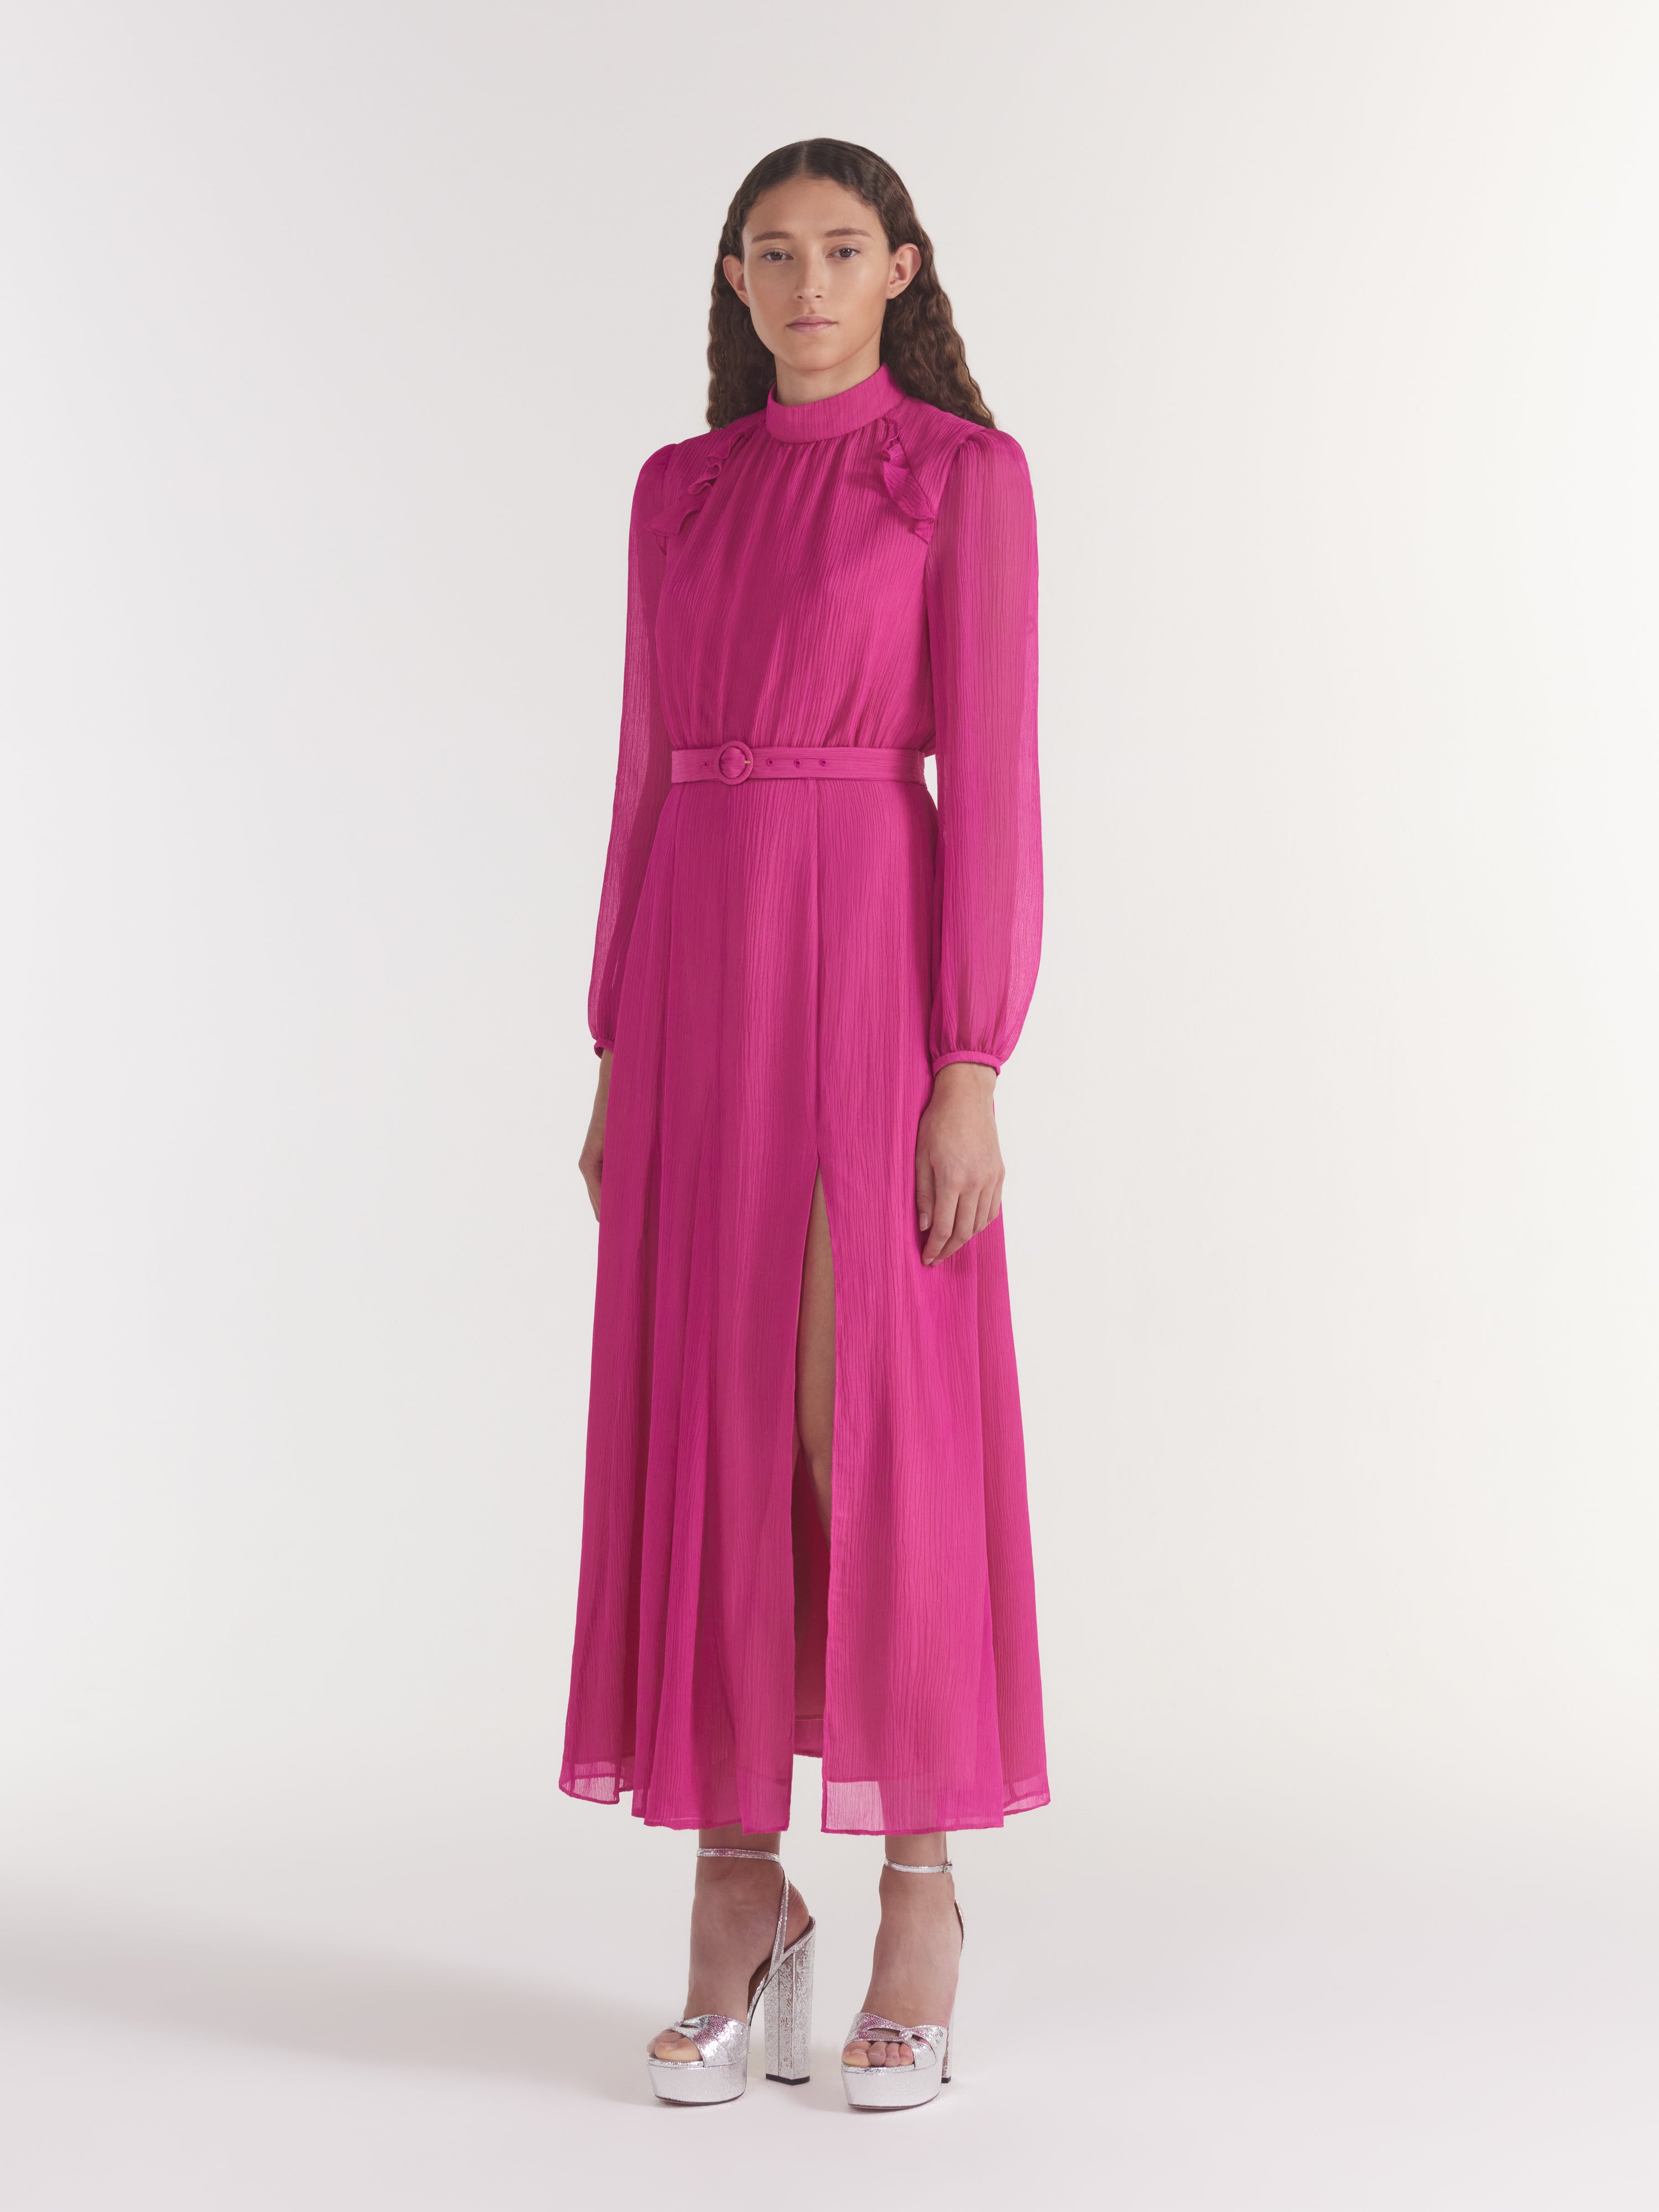 Jacqui B Dress in Posey Pink